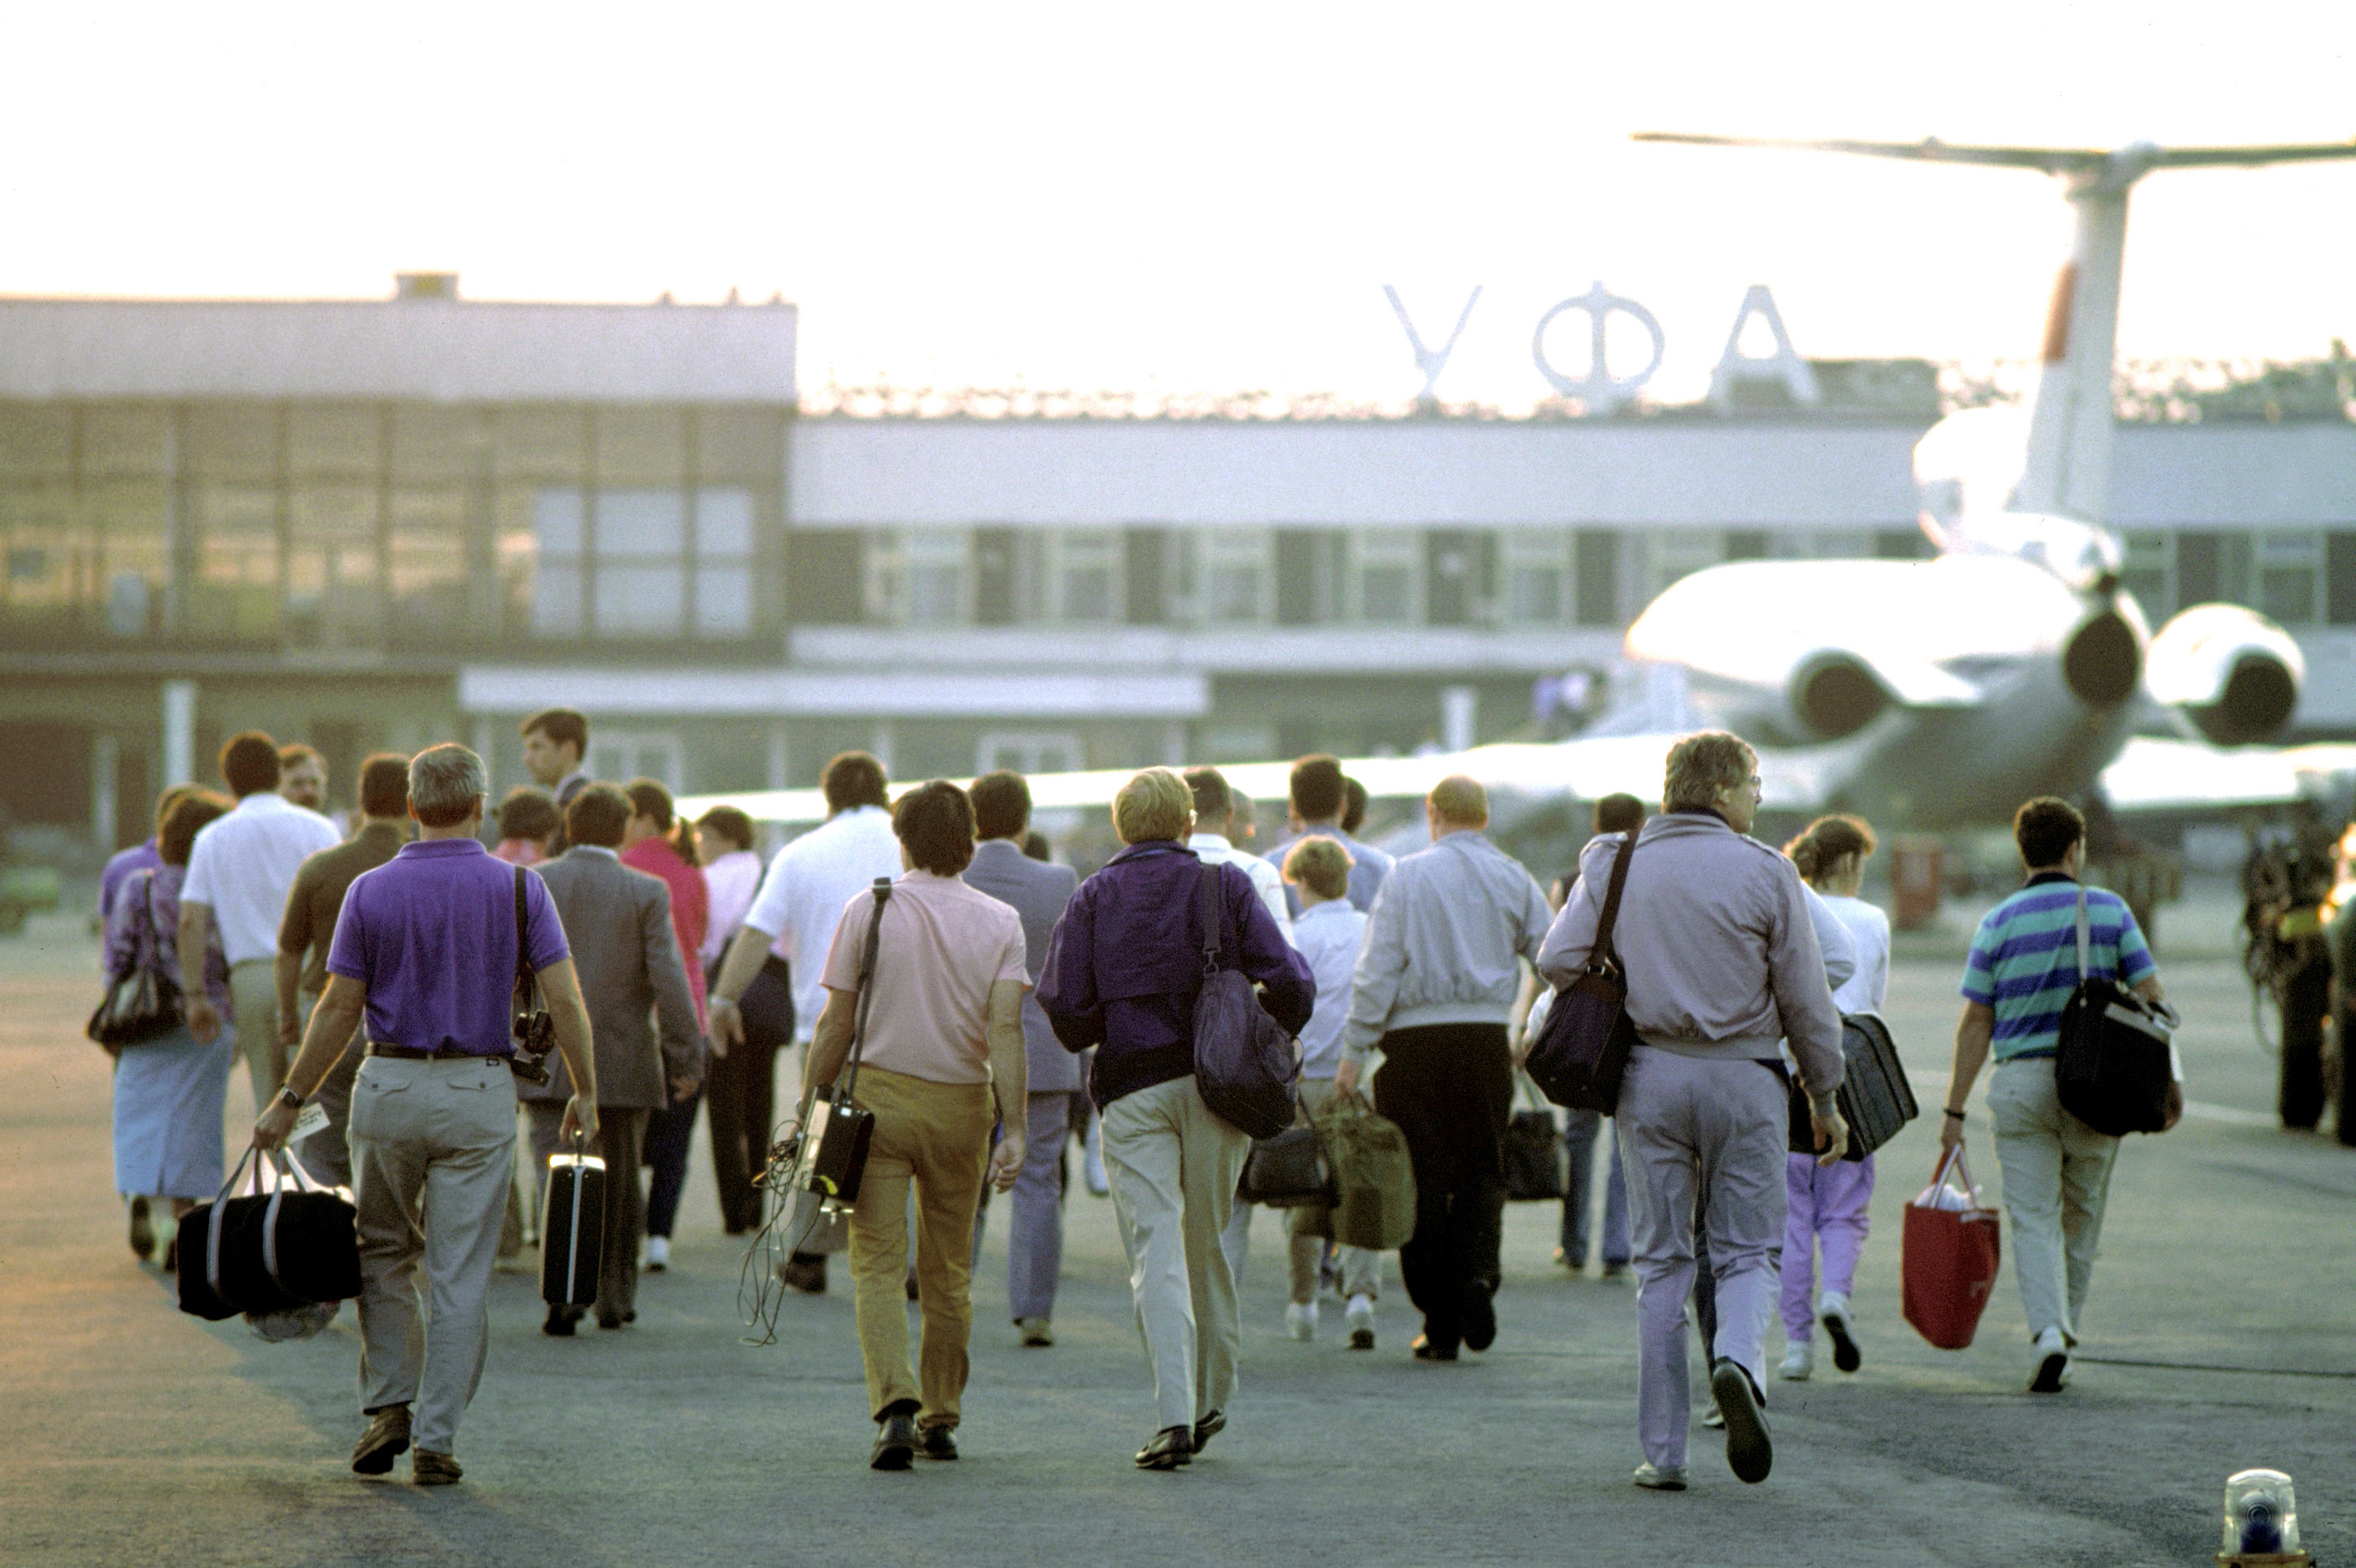 Ufa International Airport in 1989